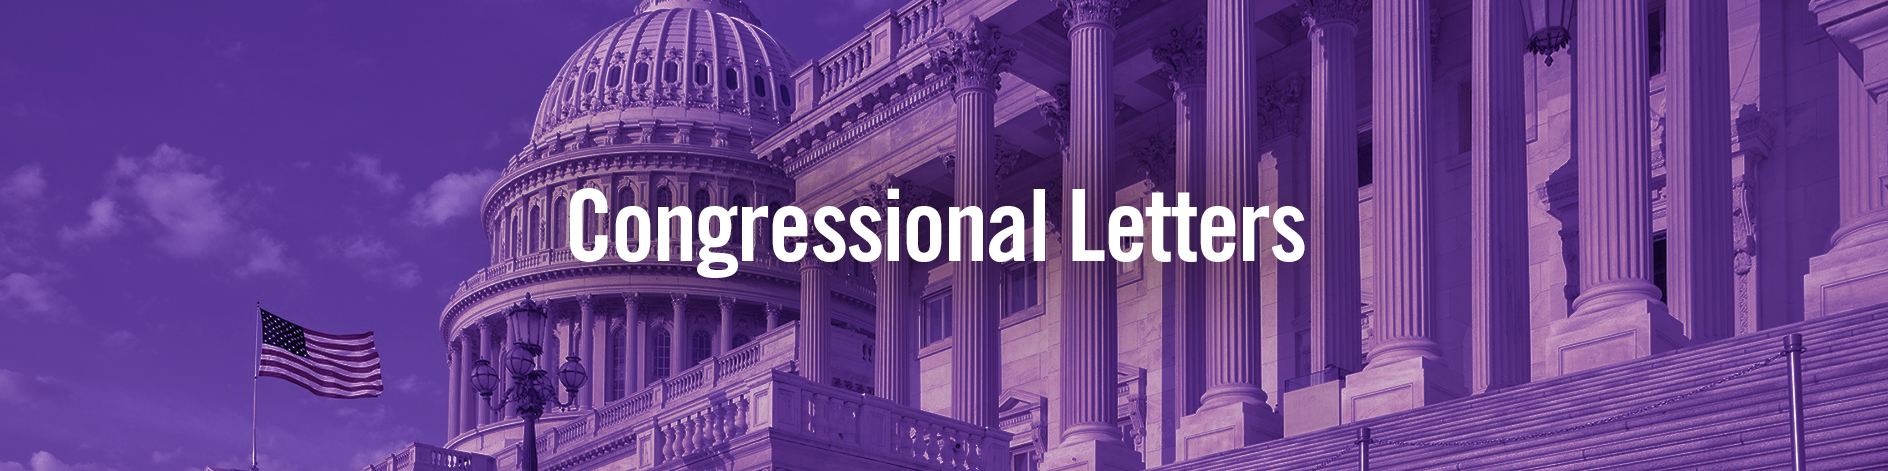 Astemcelljourney-Congressional-Letters